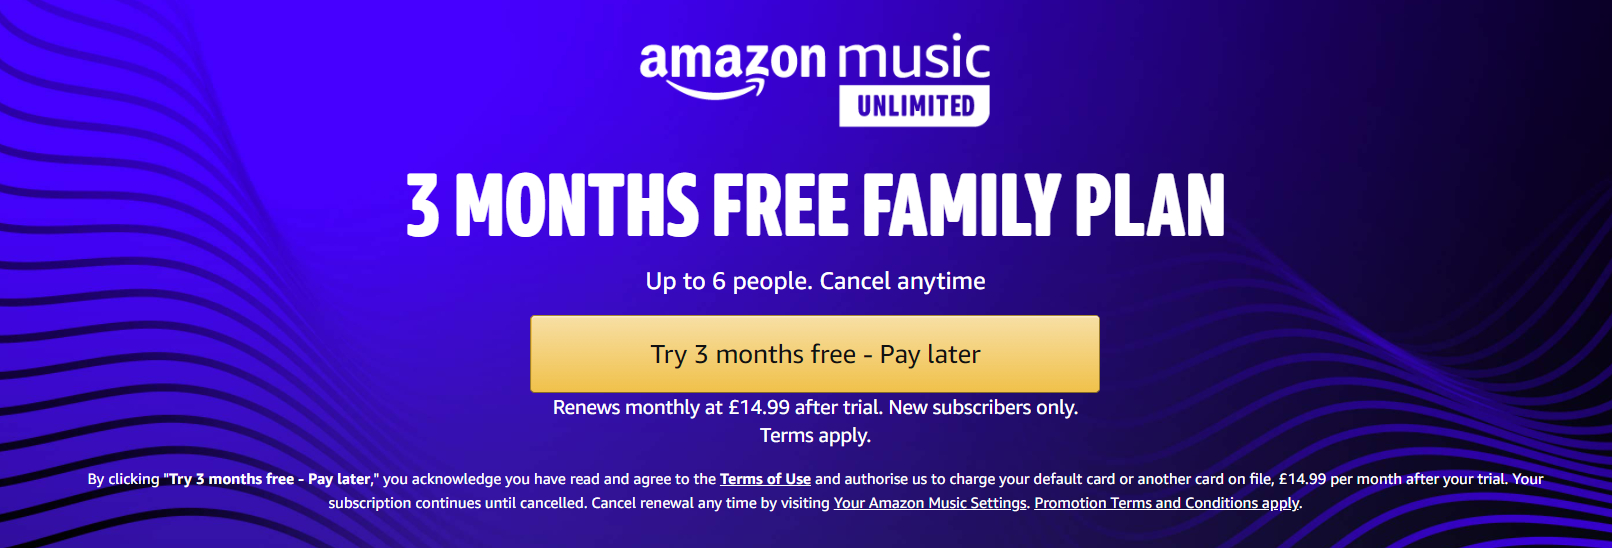 amazon music family plan cost